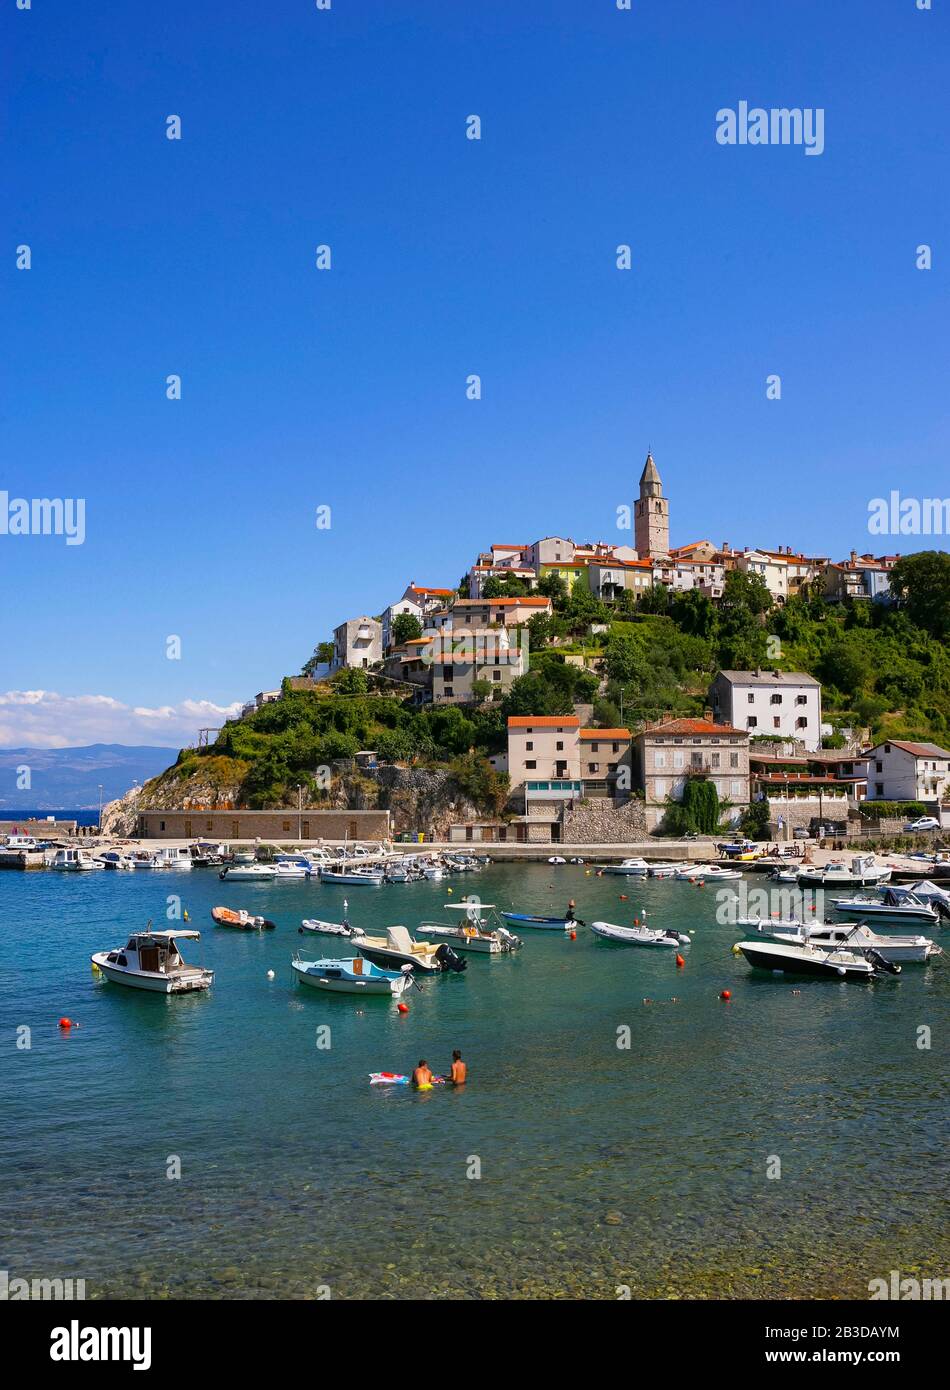 View from the port to the old town, Vrbnik, island Krk, Kvarner Gulf bay, Croatian Adriatic coast, Croatia Stock Photo